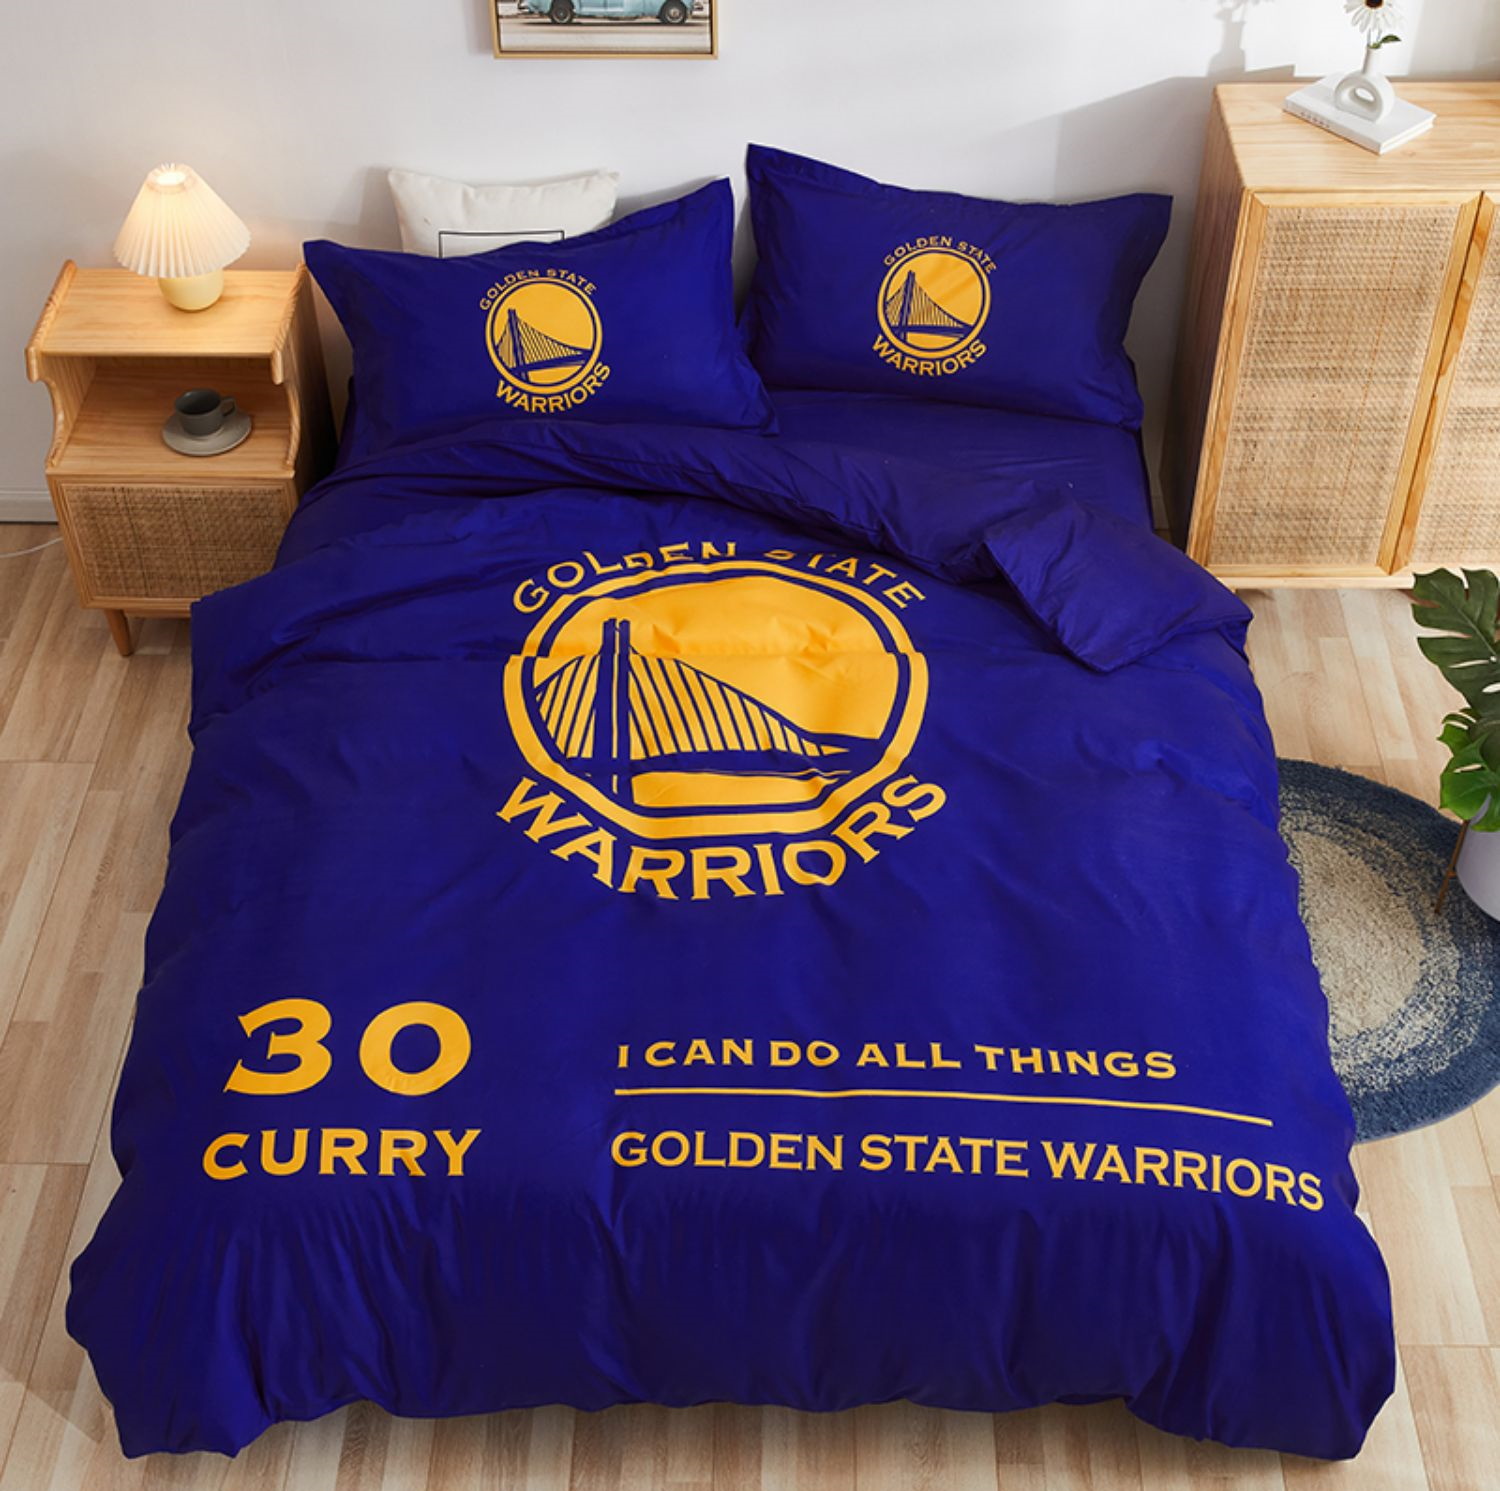 Postelnoe belyo Golden State Warriors Curry 30 Blue